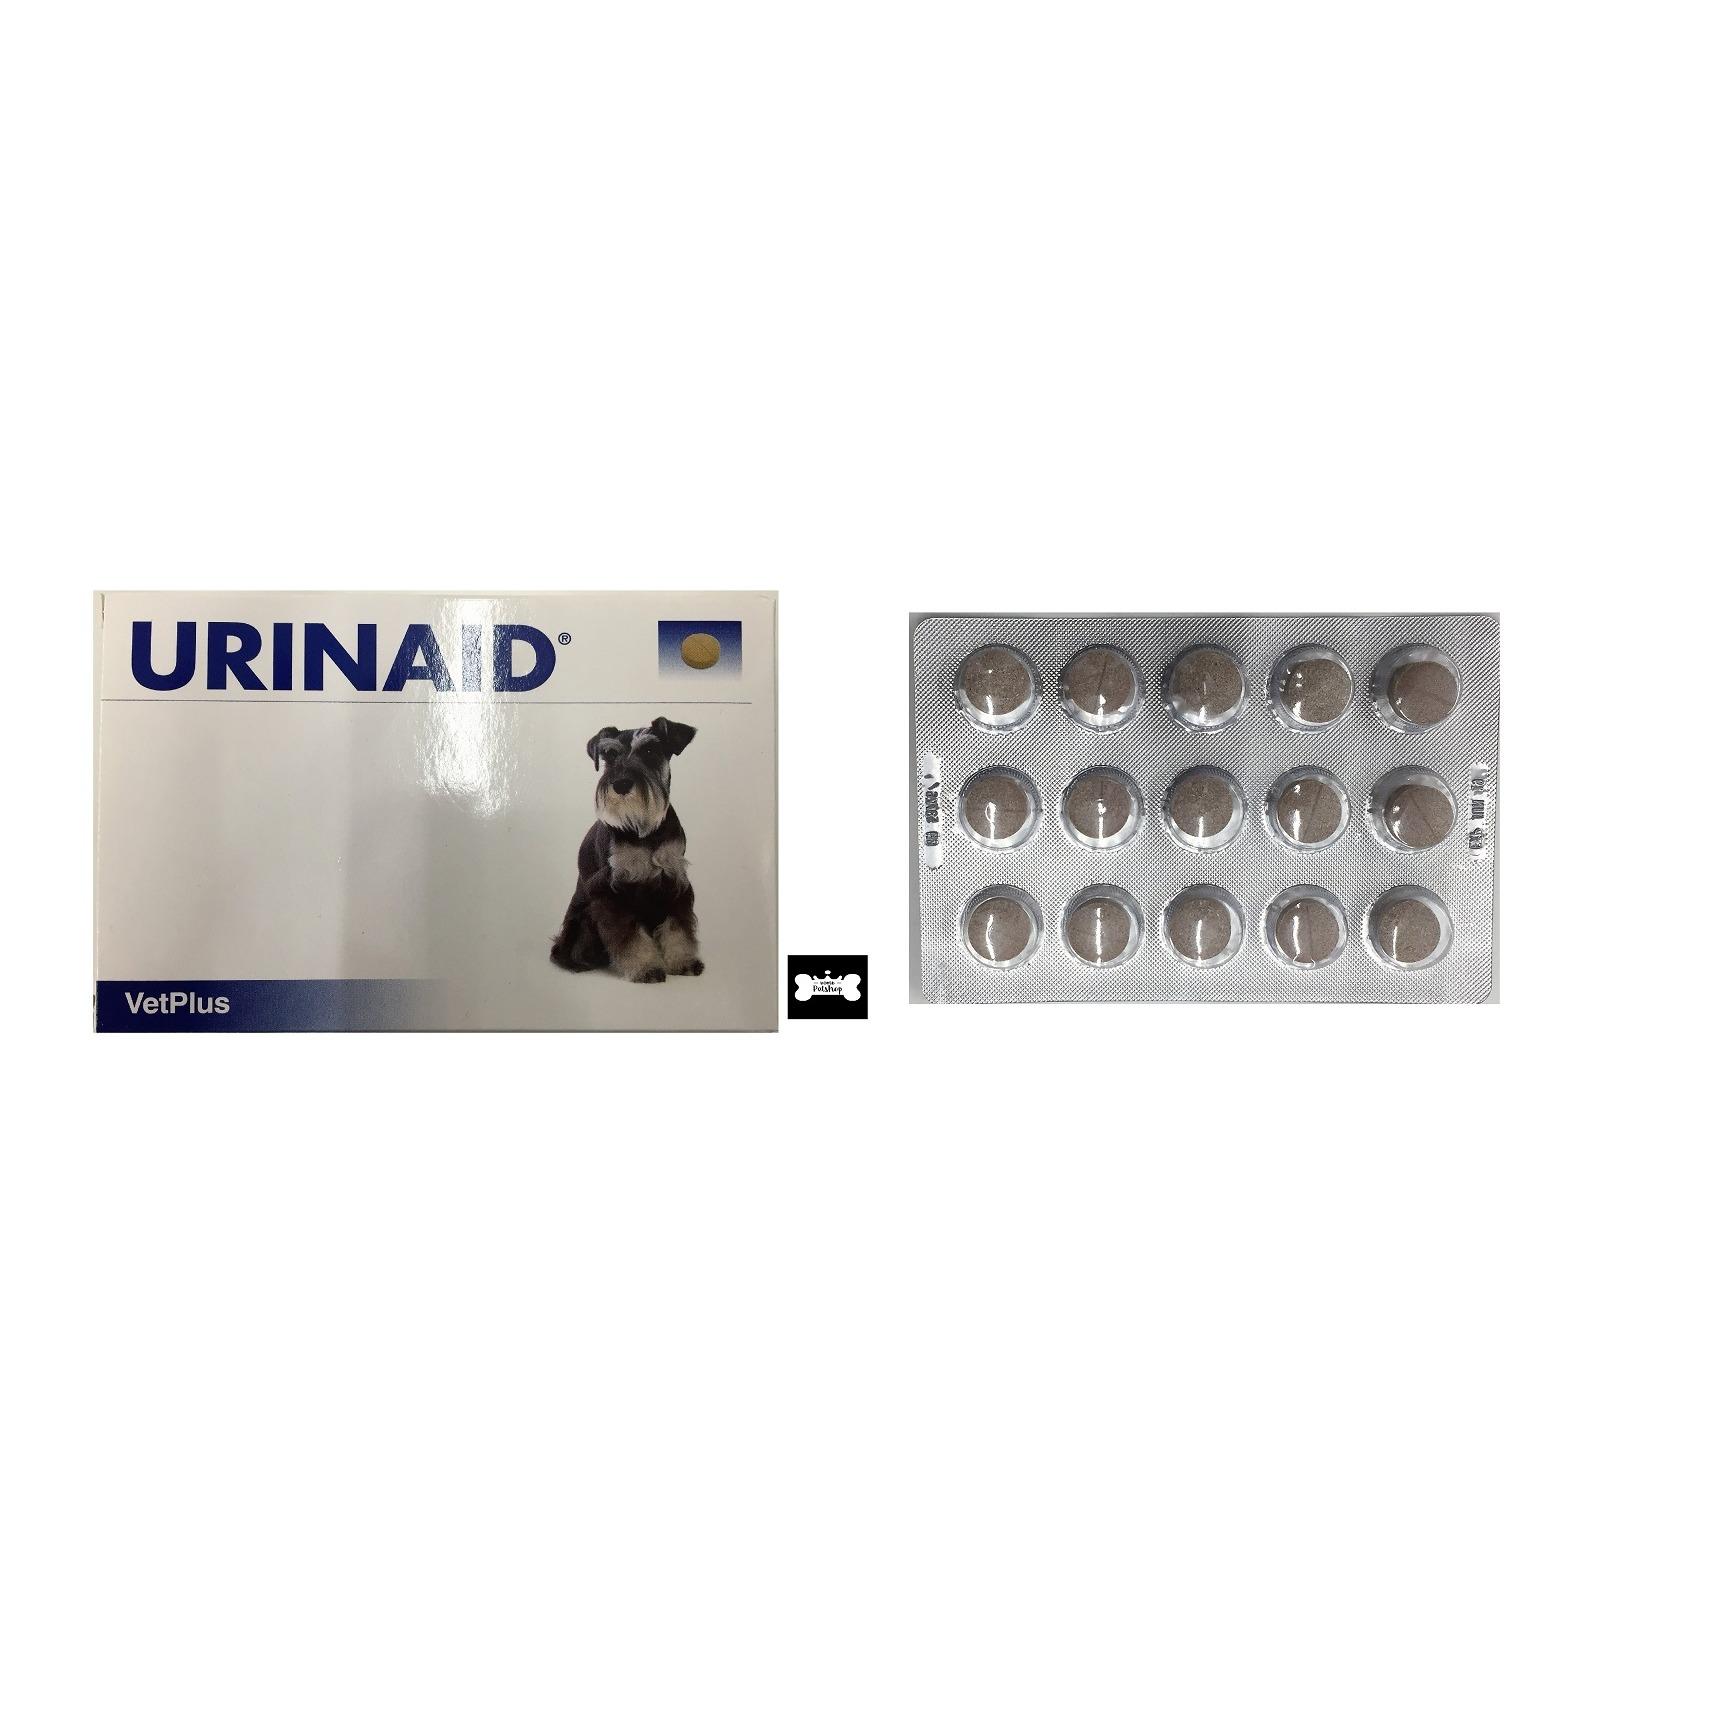 Urinaid chewable อาหารเสริม ประกอบการรักษาโรคกระเพาะฉี่อักเสบในสุนัข บรรจุ 60 caps